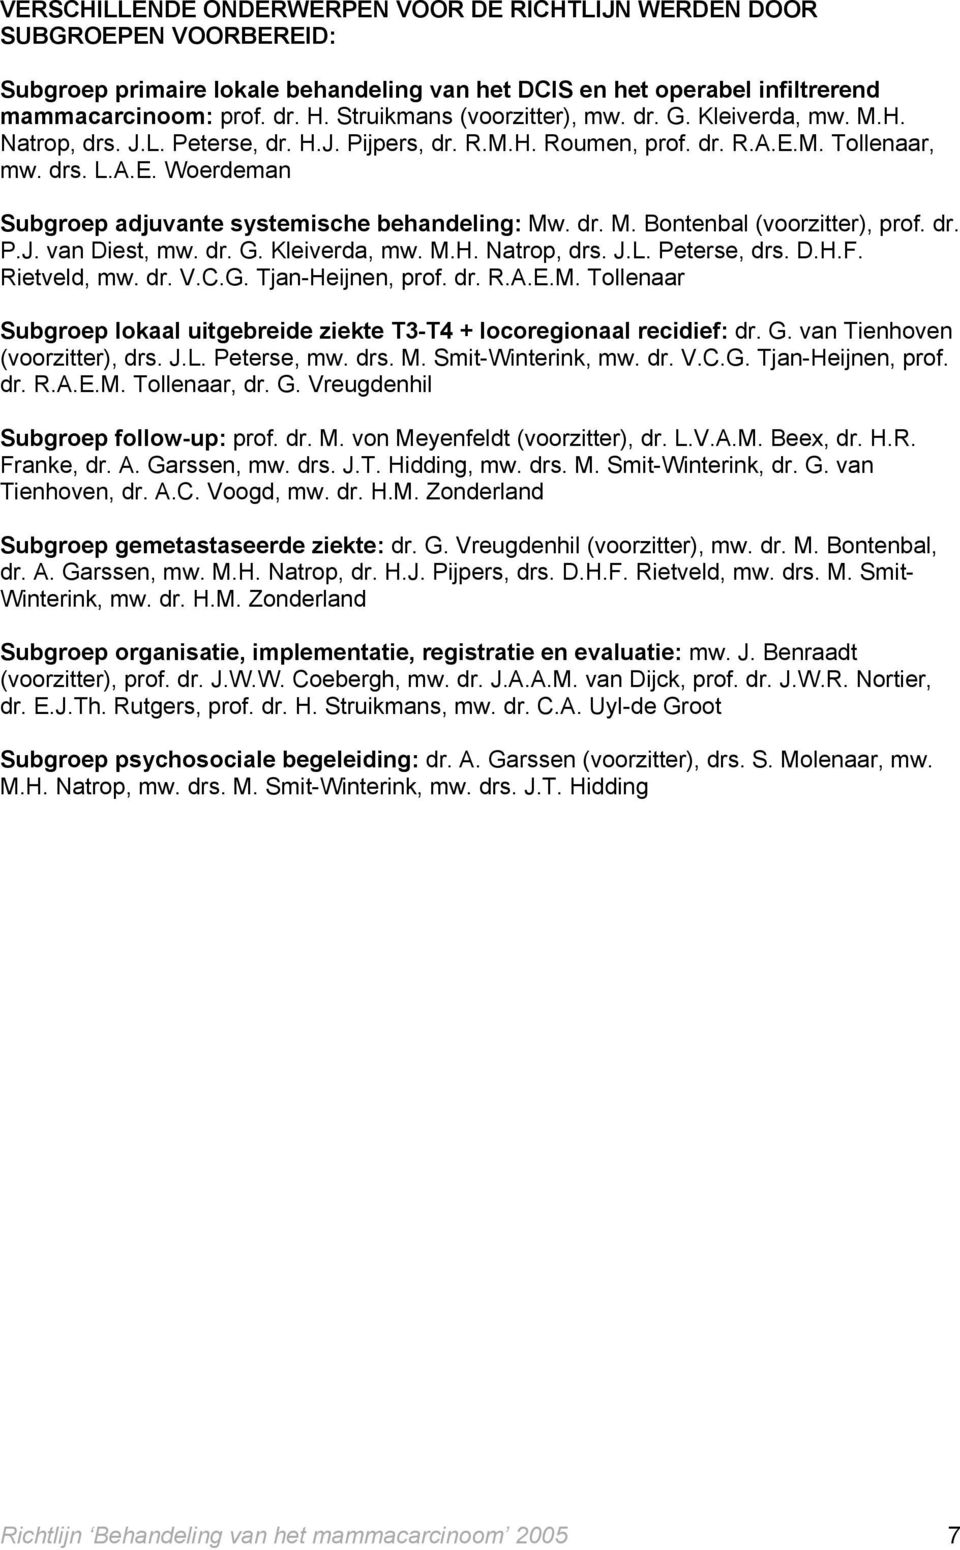 dr. M. Bontenbal (voorzitter), prof. dr. P.J. van Diest, mw. dr. G. Kleiverda, mw. M.H. Natrop, drs. J.L. Peterse, drs. D.H.F. Rietveld, mw. dr. V.C.G. Tjan-Heijnen, prof. dr. R.A.E.M. Tollenaar Subgroep lokaal uitgebreide ziekte T3-T4 + locoregionaal recidief: dr.